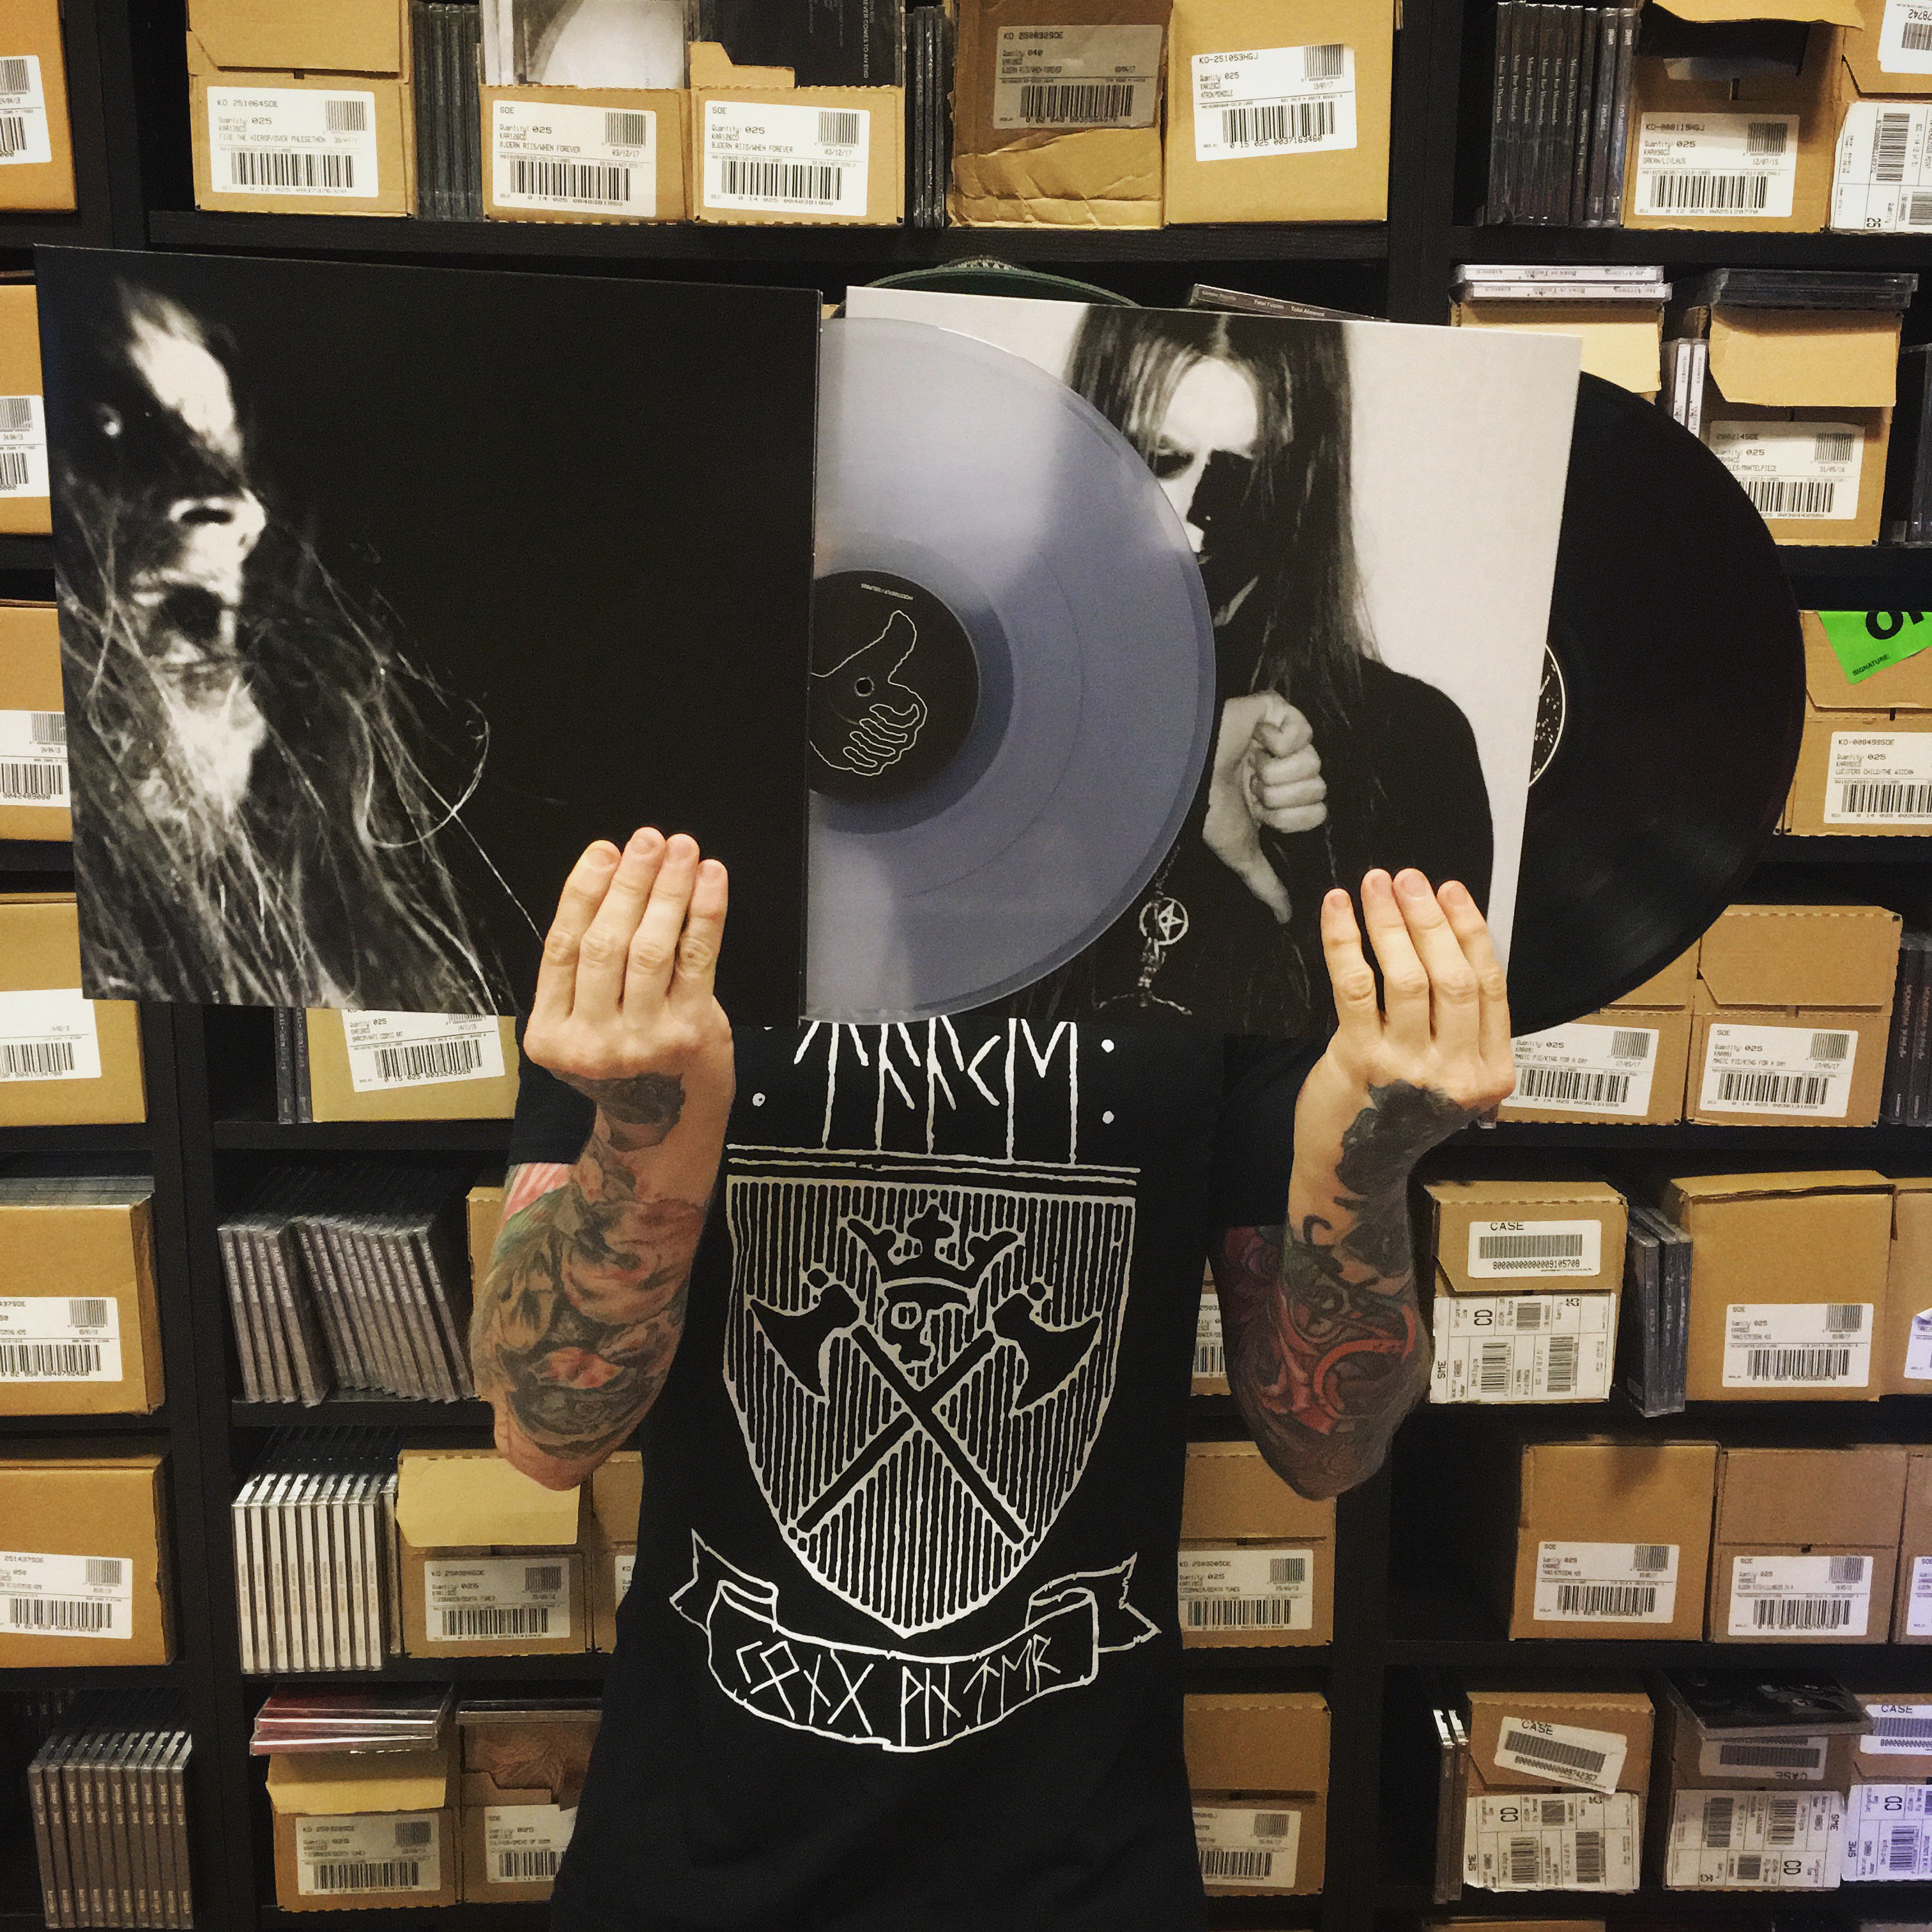 Indgang Berolige Ren og skær Dark Essence Records on Twitter: "Taake - Doedskvad vinyl + Noregs Vaapen  Clear Transparent vinyl version in stock! https://t.co/grcBq8PcYK  https://t.co/qPmE4LcAMu https://t.co/1iTG1TWo7u #Taake #Blackmetal  https://t.co/bnacoYDfBr" / Twitter